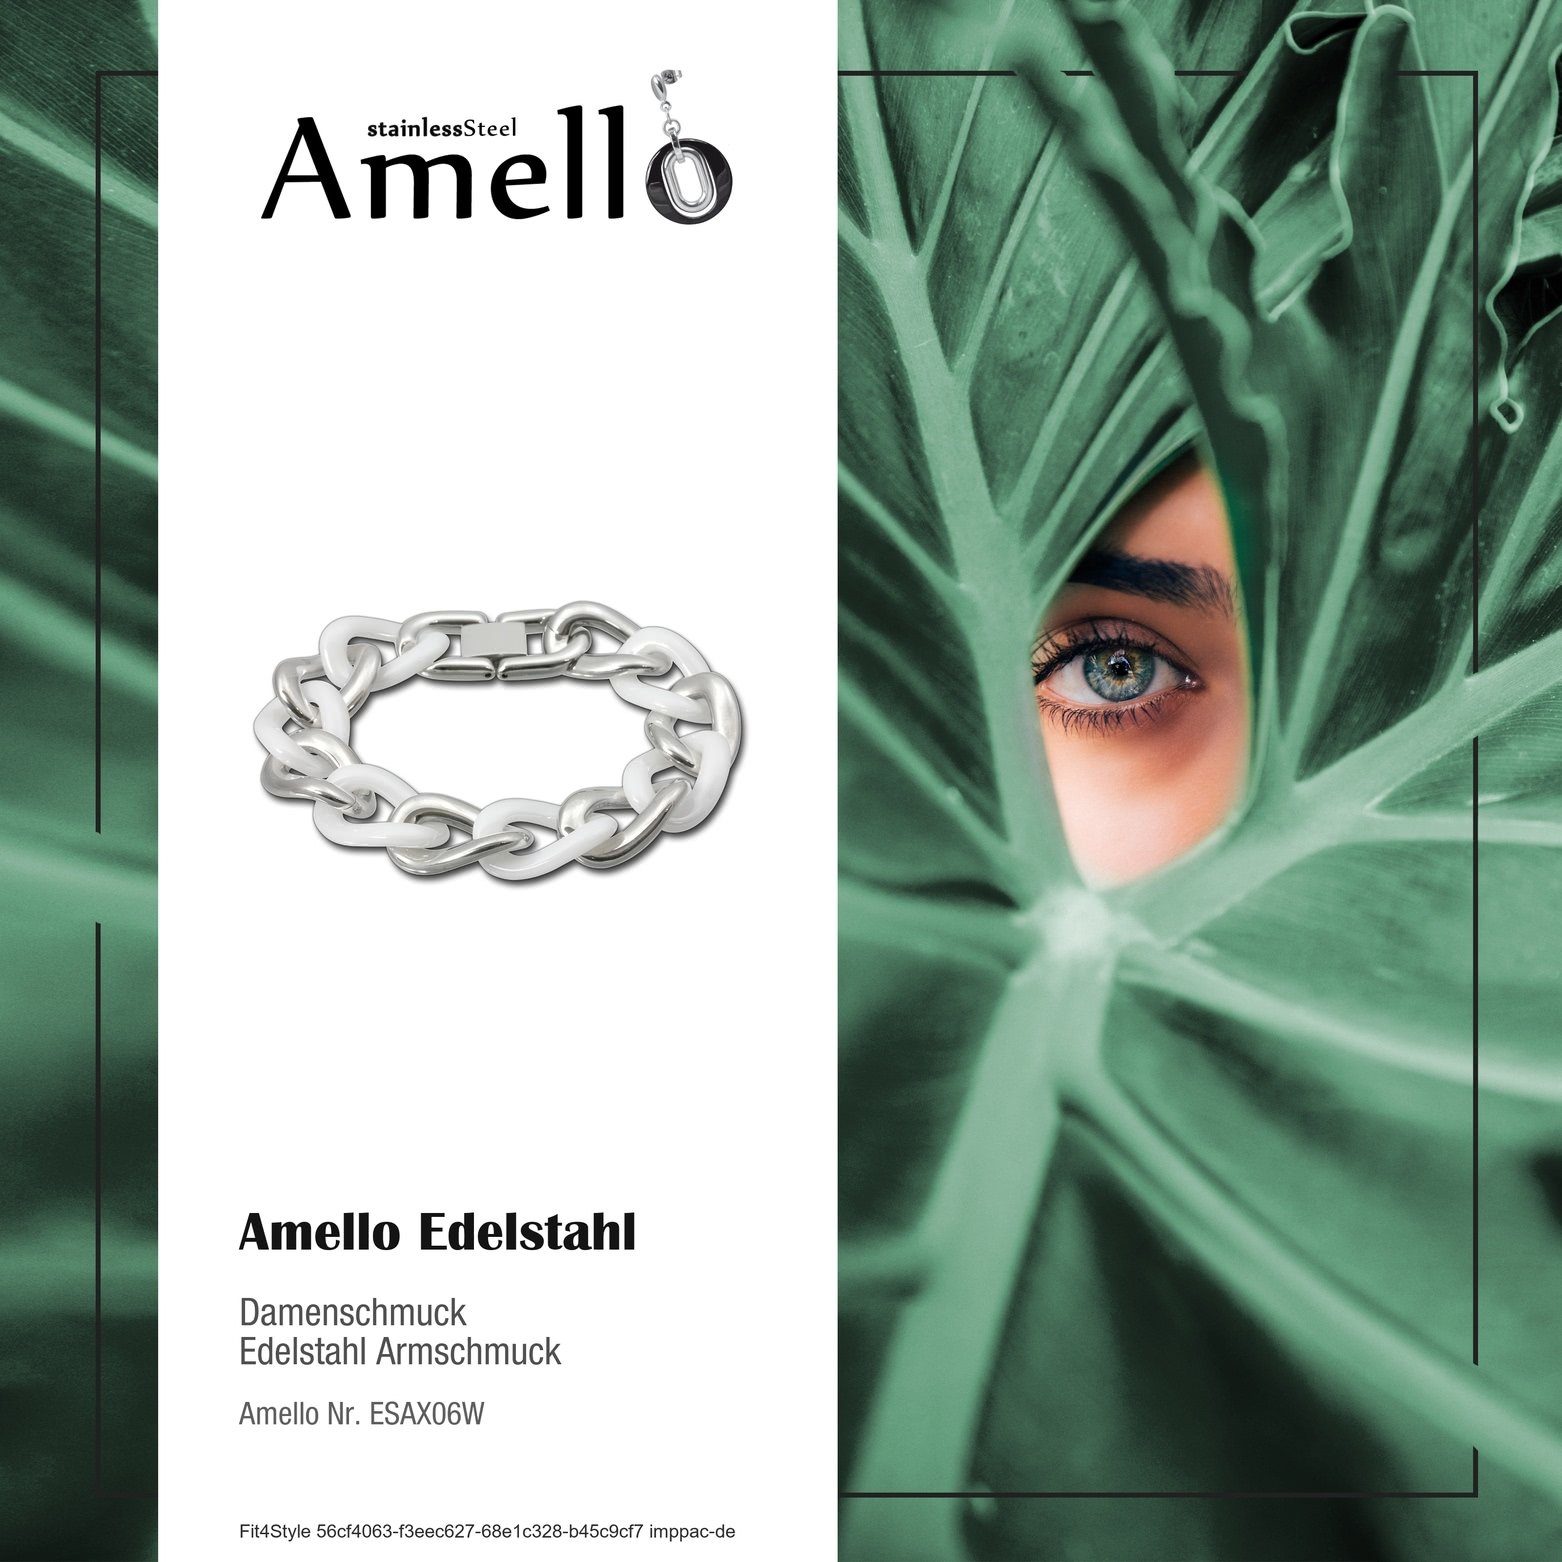 Damen Amello für Panzer Edelstahlarmband Armbänder Armband weiß (Armband), Edelstahl Big silber Amello (Stainless Steel)